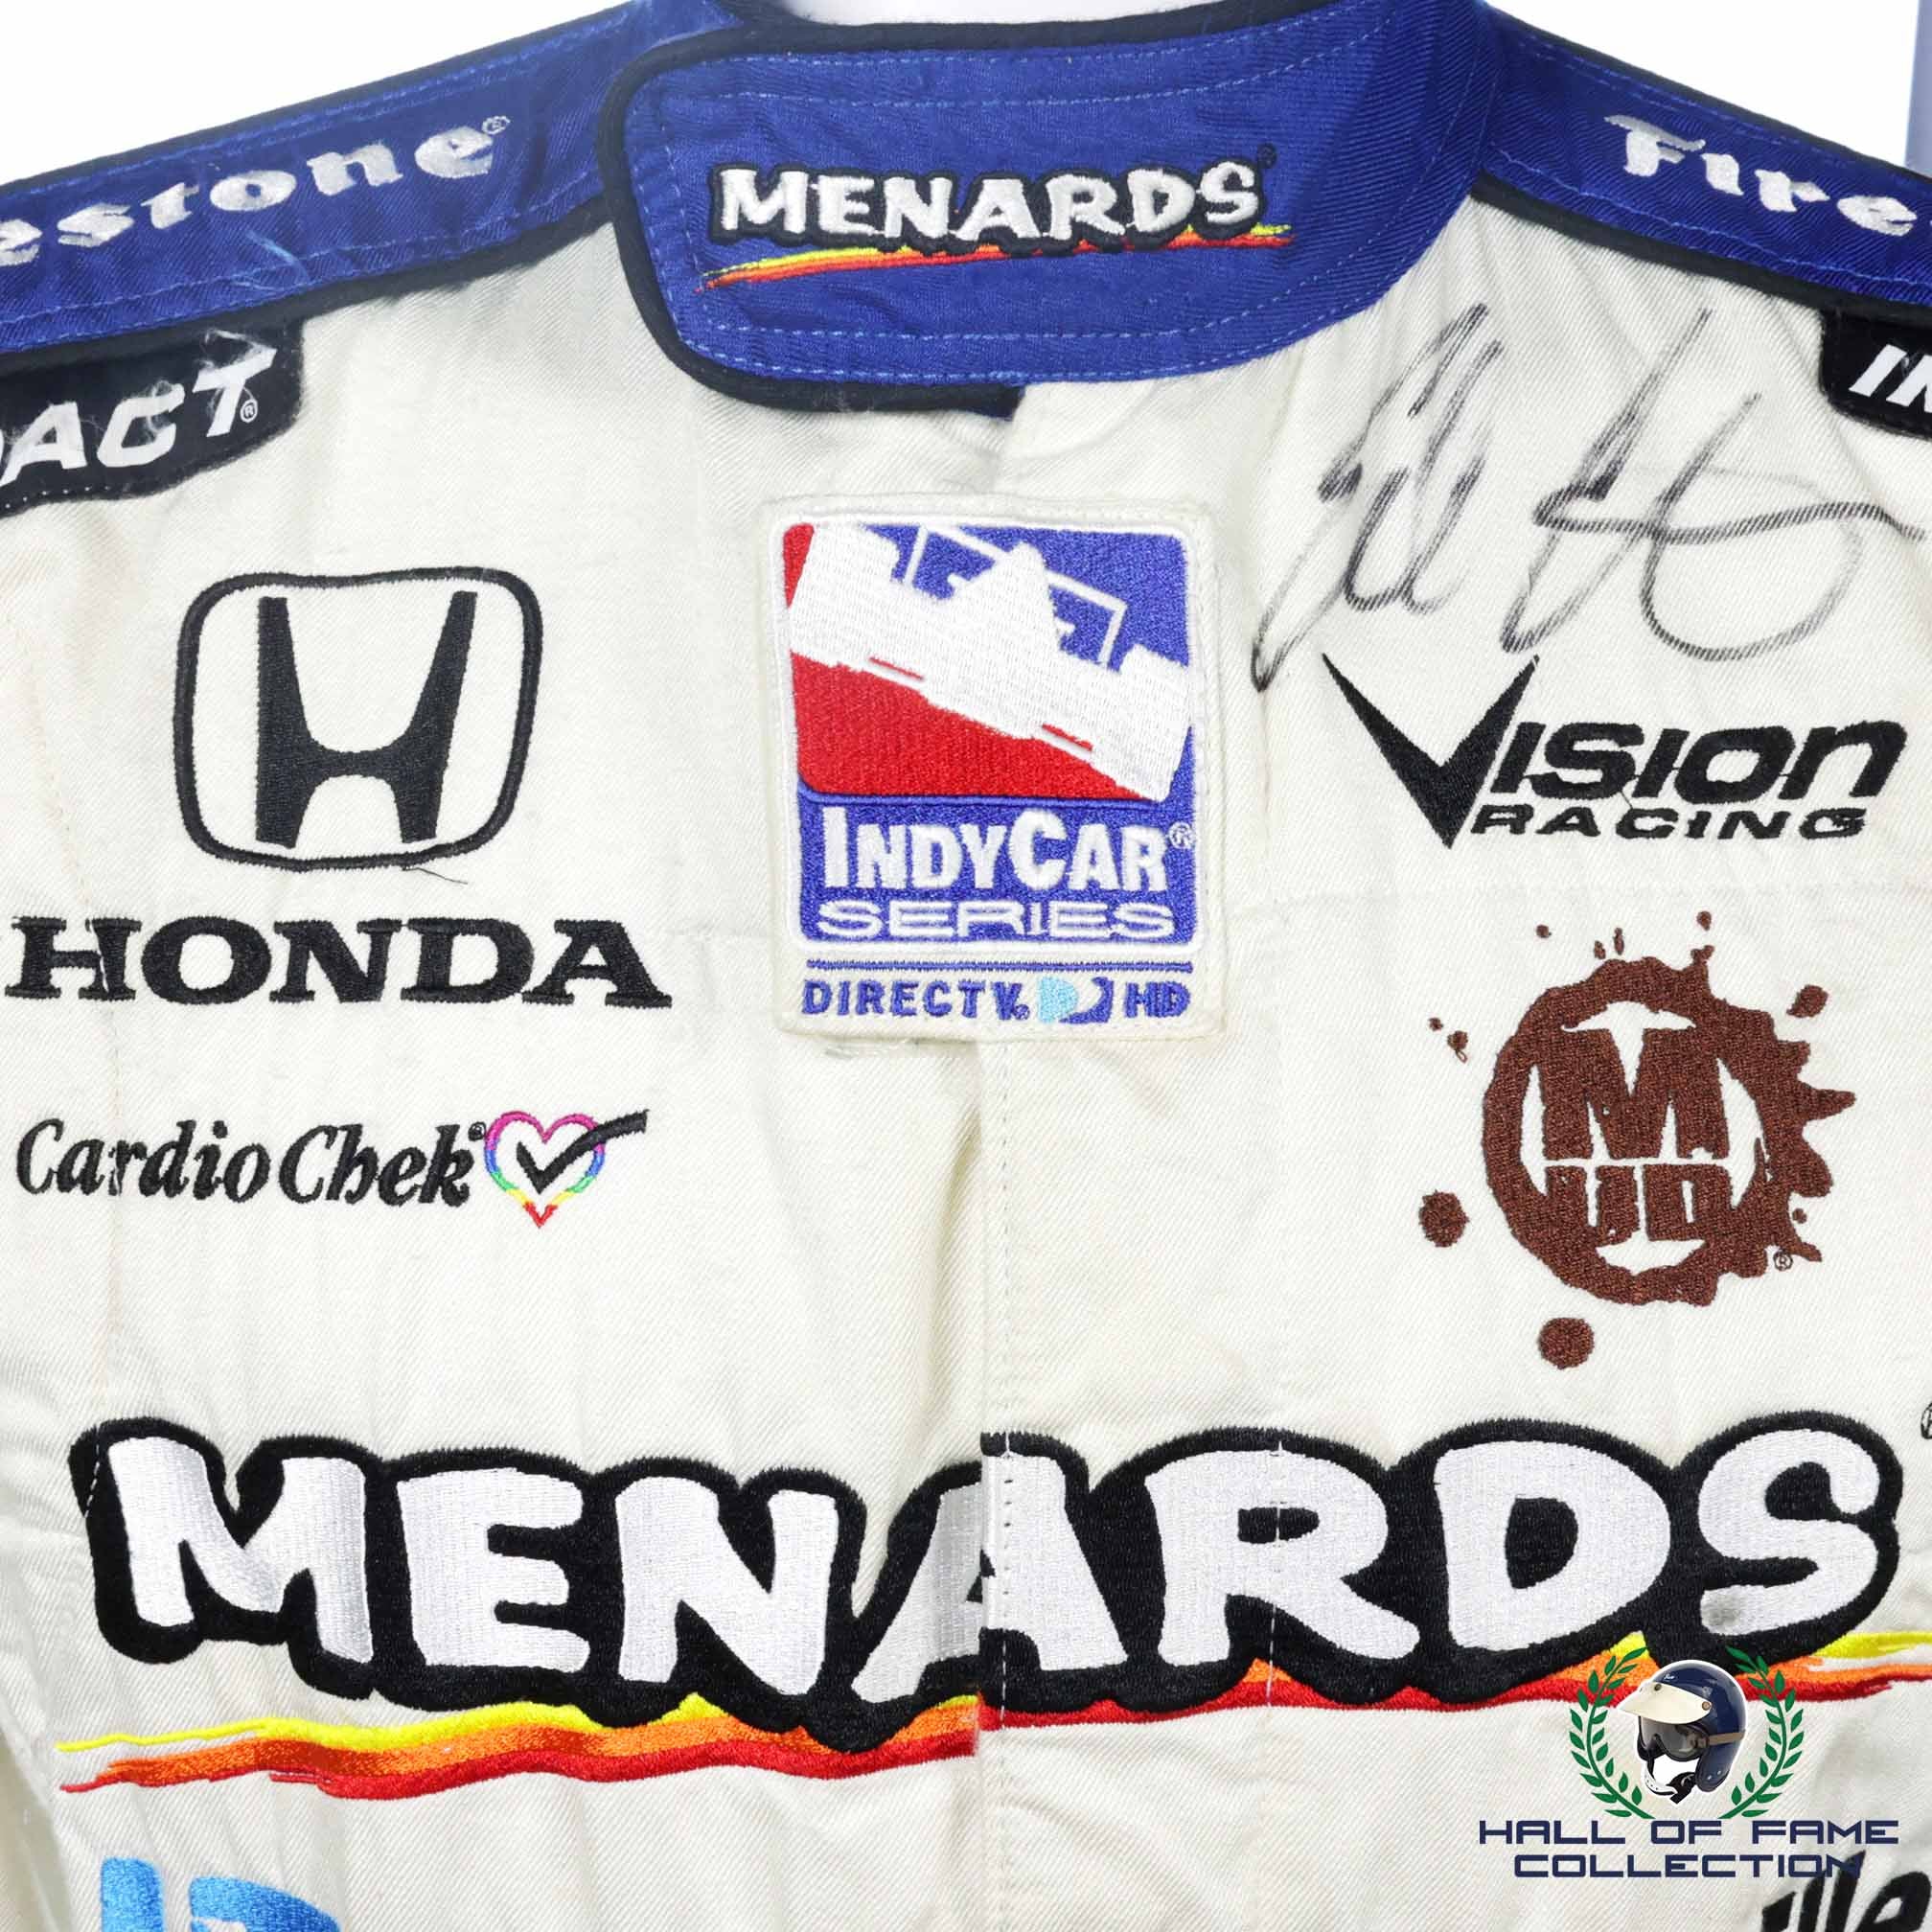 2008 Ed Carpenter Signed Race Used Menards IndyCar Suit